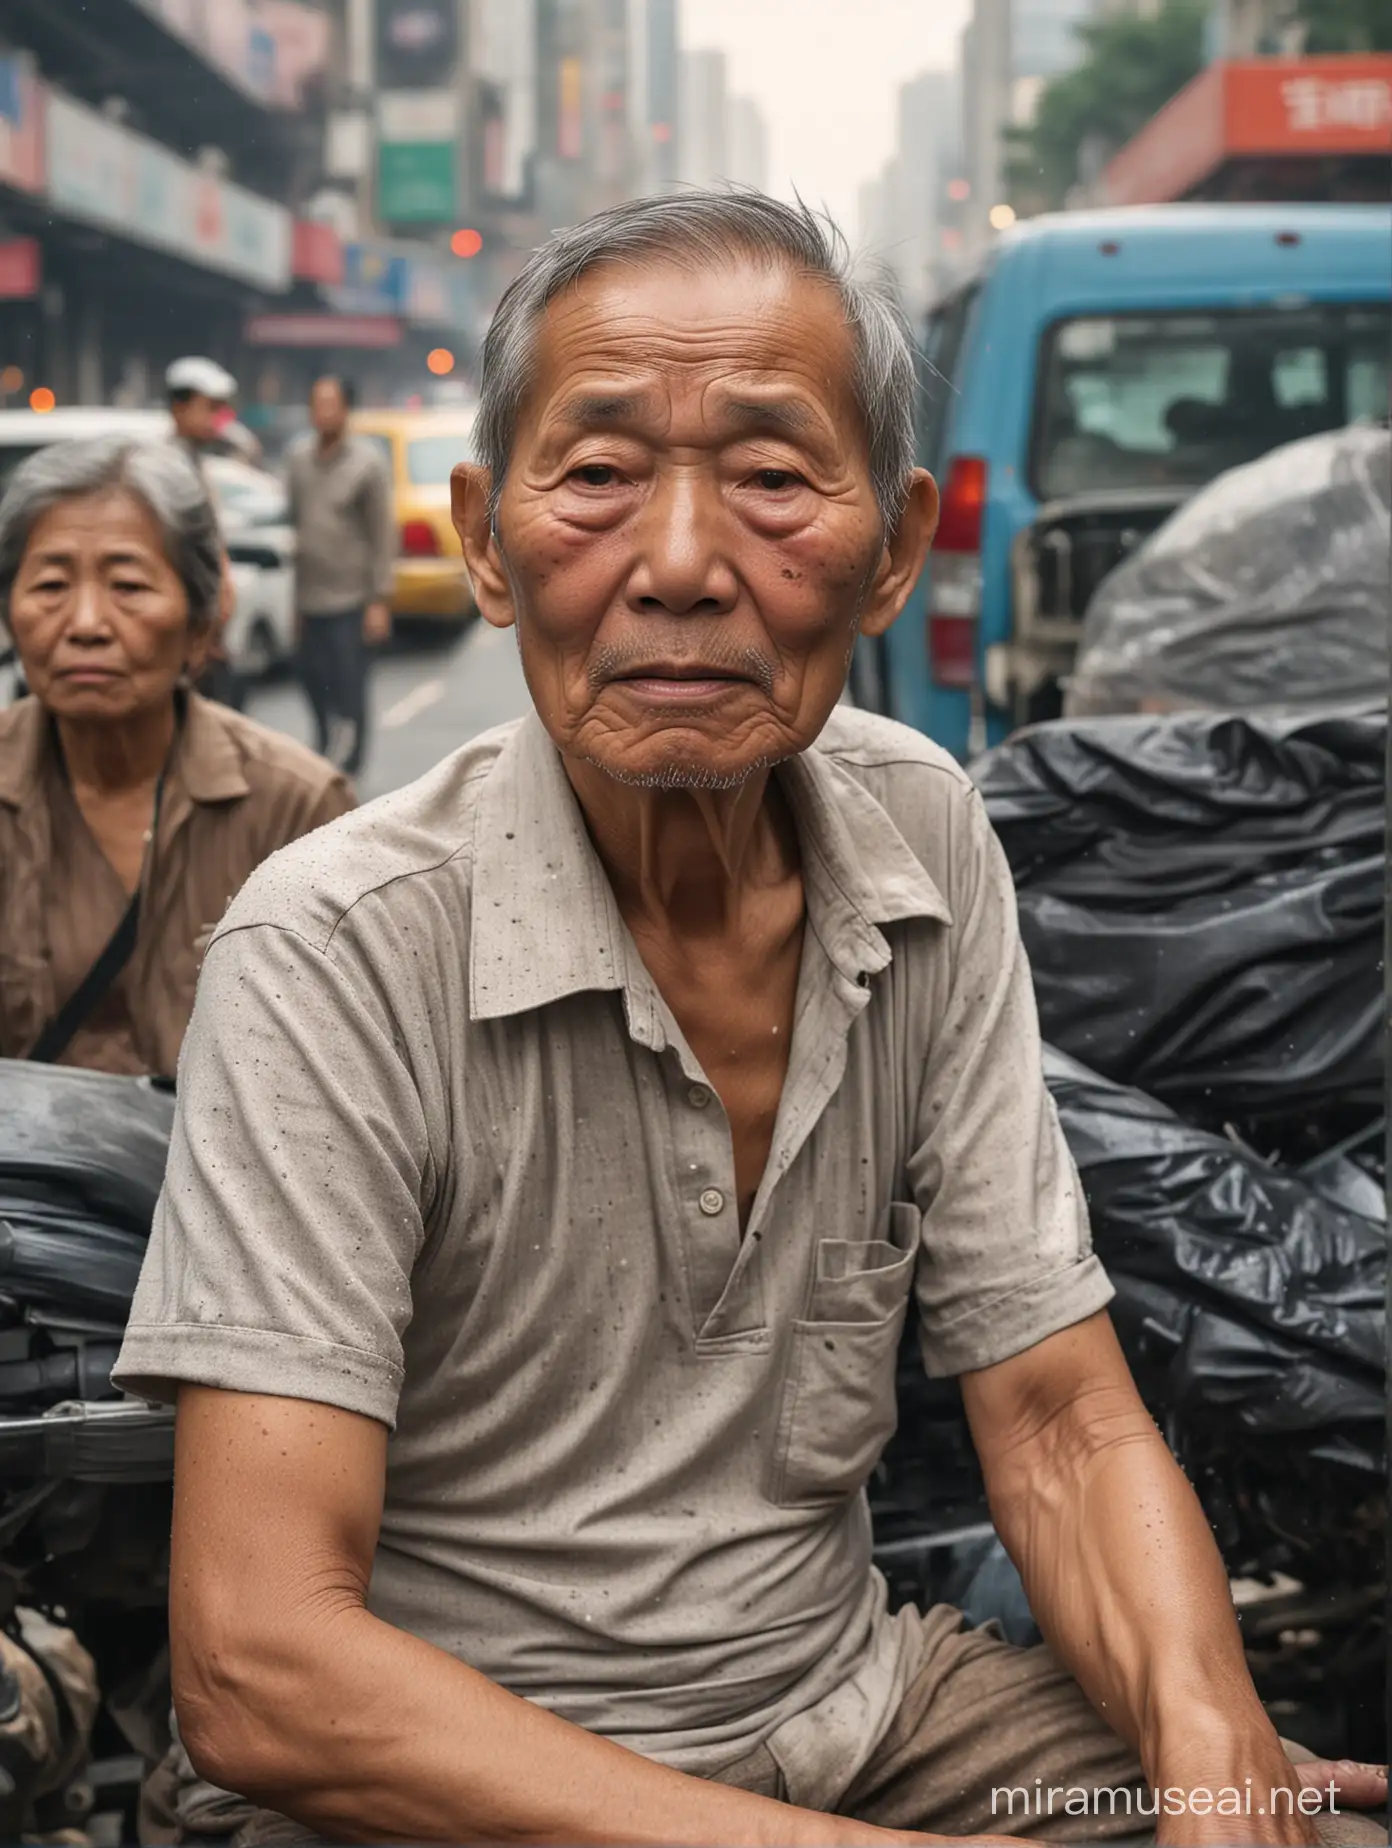 potret telihat seorang orang tua asia yang lagi duduk penuh dengan keringat di sekujur tubuhnya raut wajah nya terlihat kecapean, latar belakang kota yang padat dengan lalulalang mobil motor orany yang berjalan kelihat sibuk masing dan banyak polusi udara